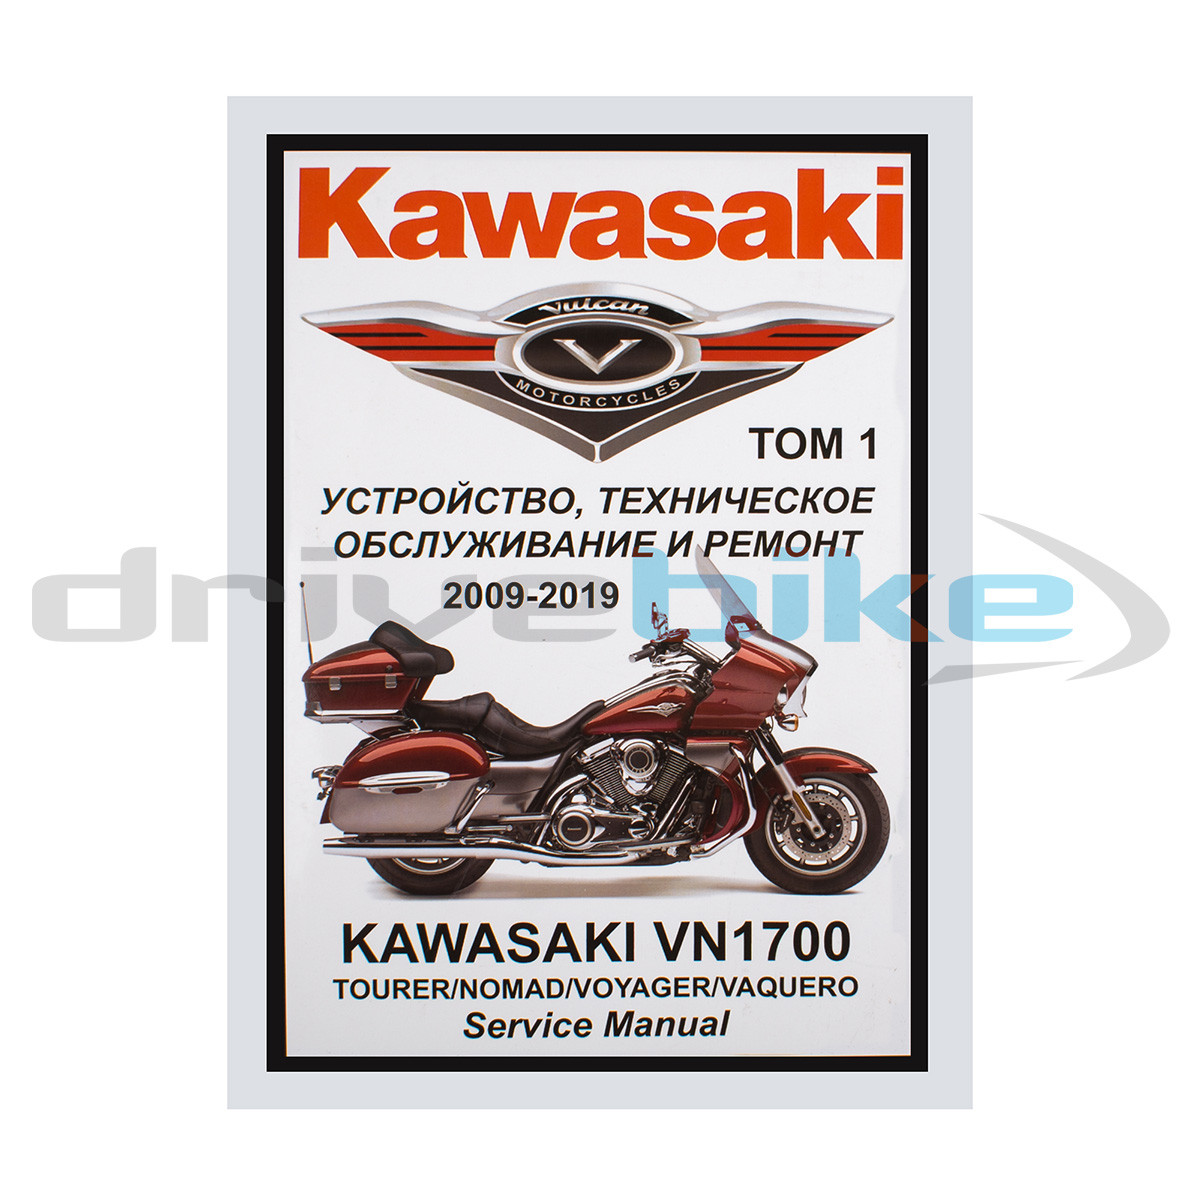 Мотоцикл kawasaki vn 900 light tourer 2007 - изучаем вопрос